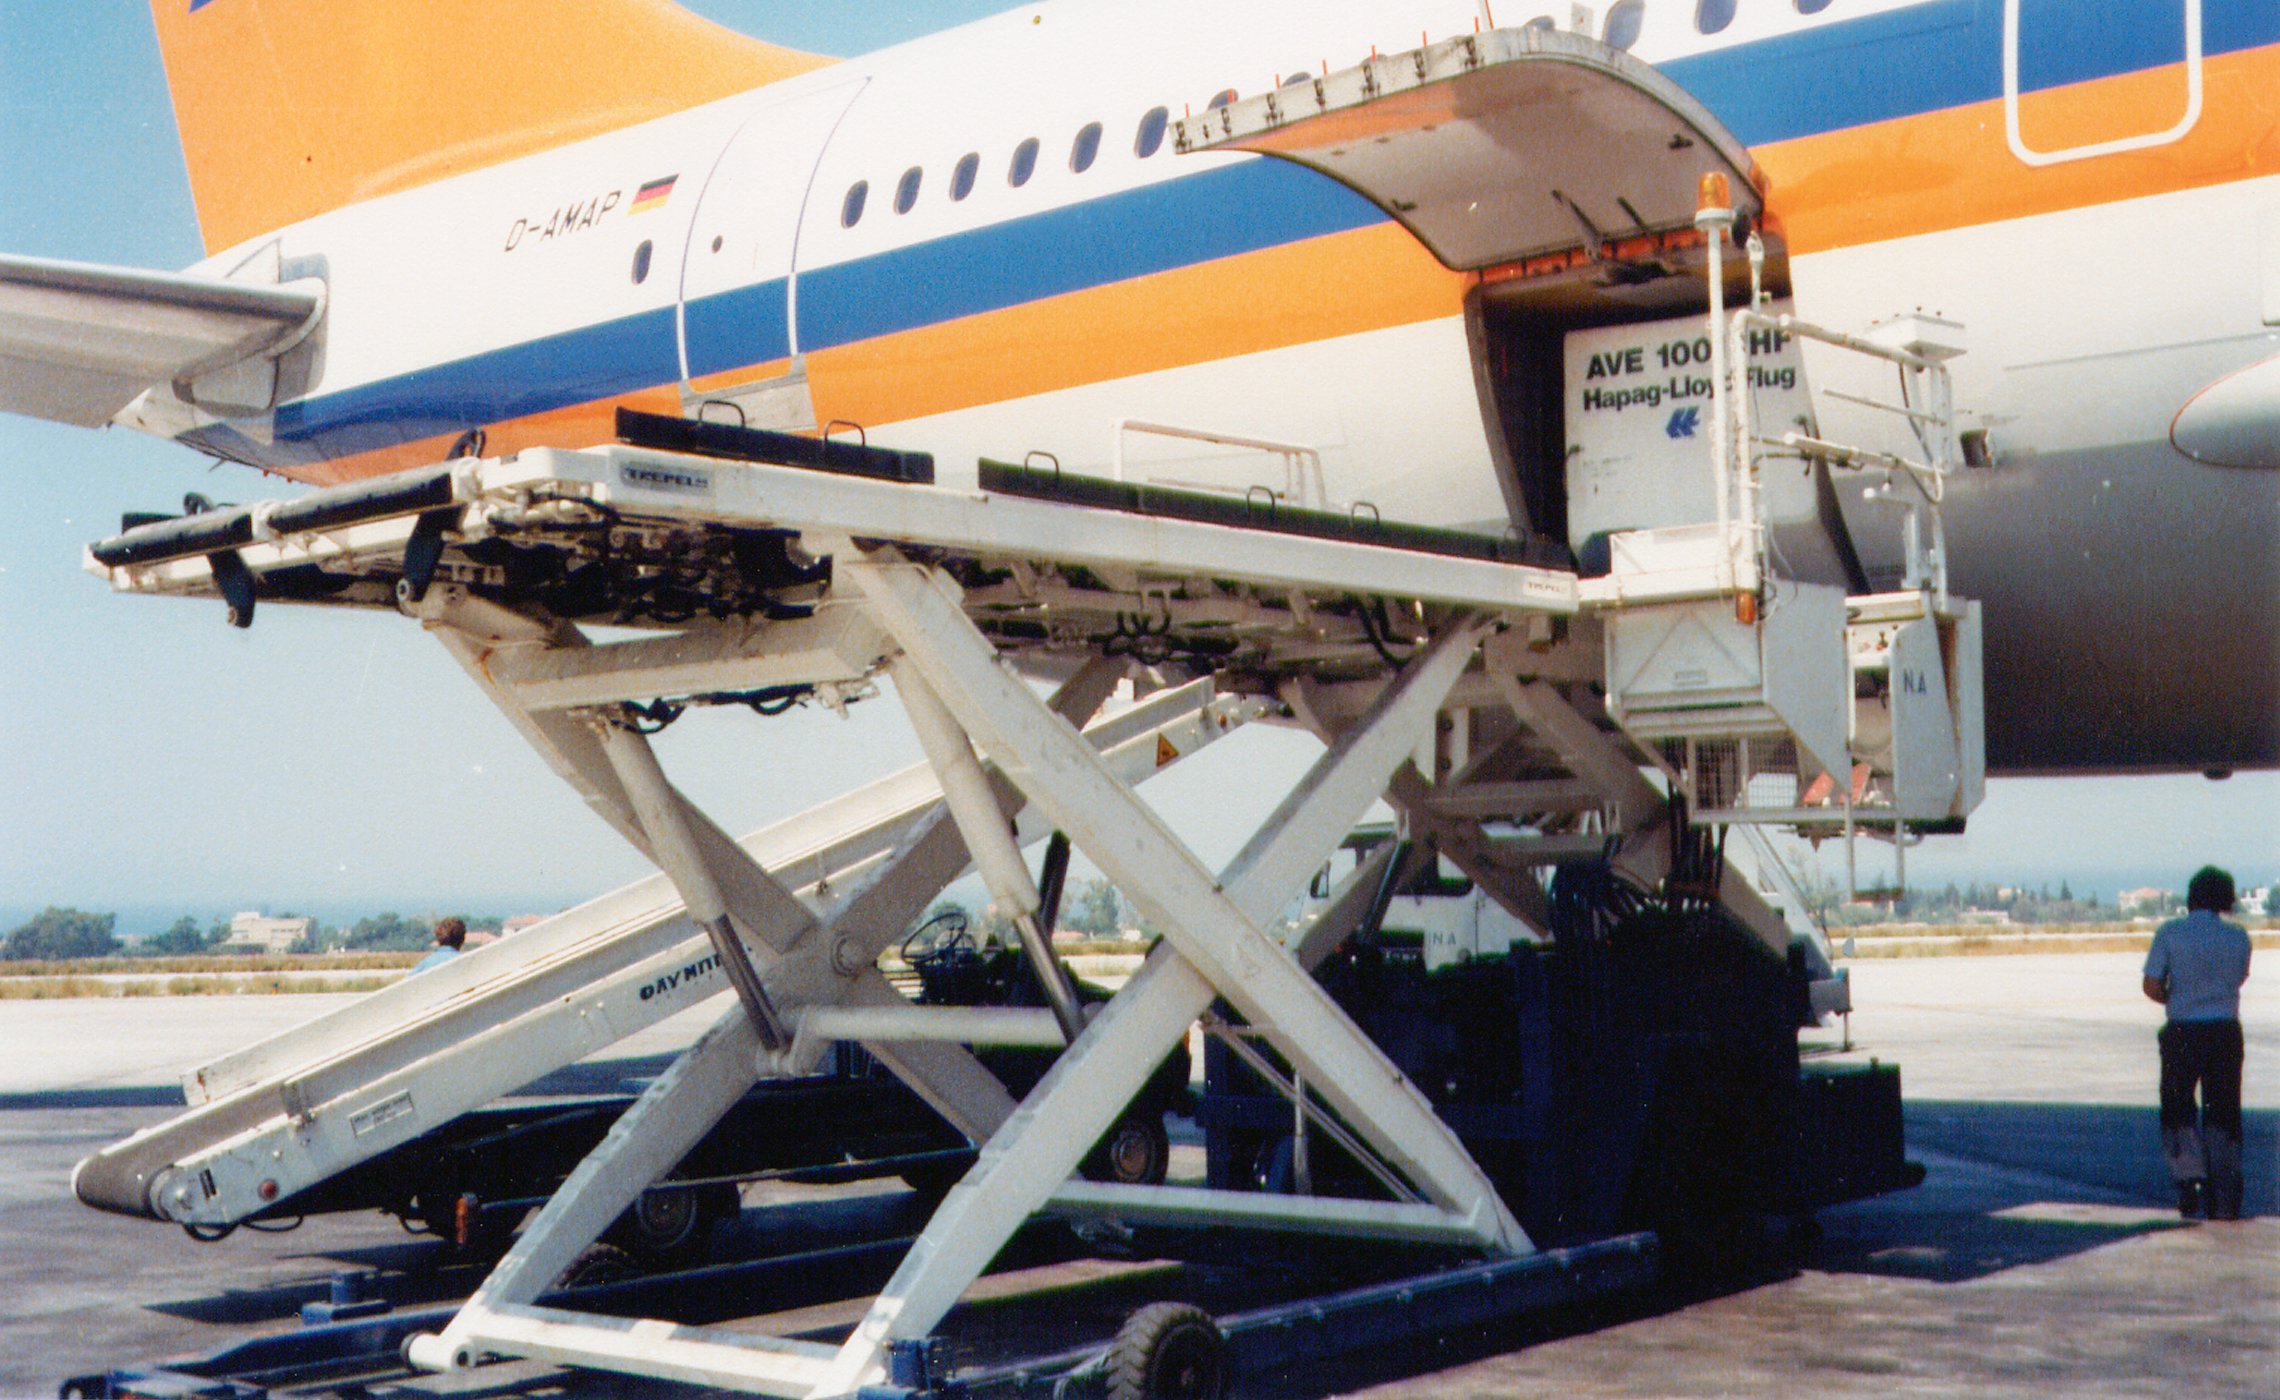 TREPEL Airport Equipment - History 1973